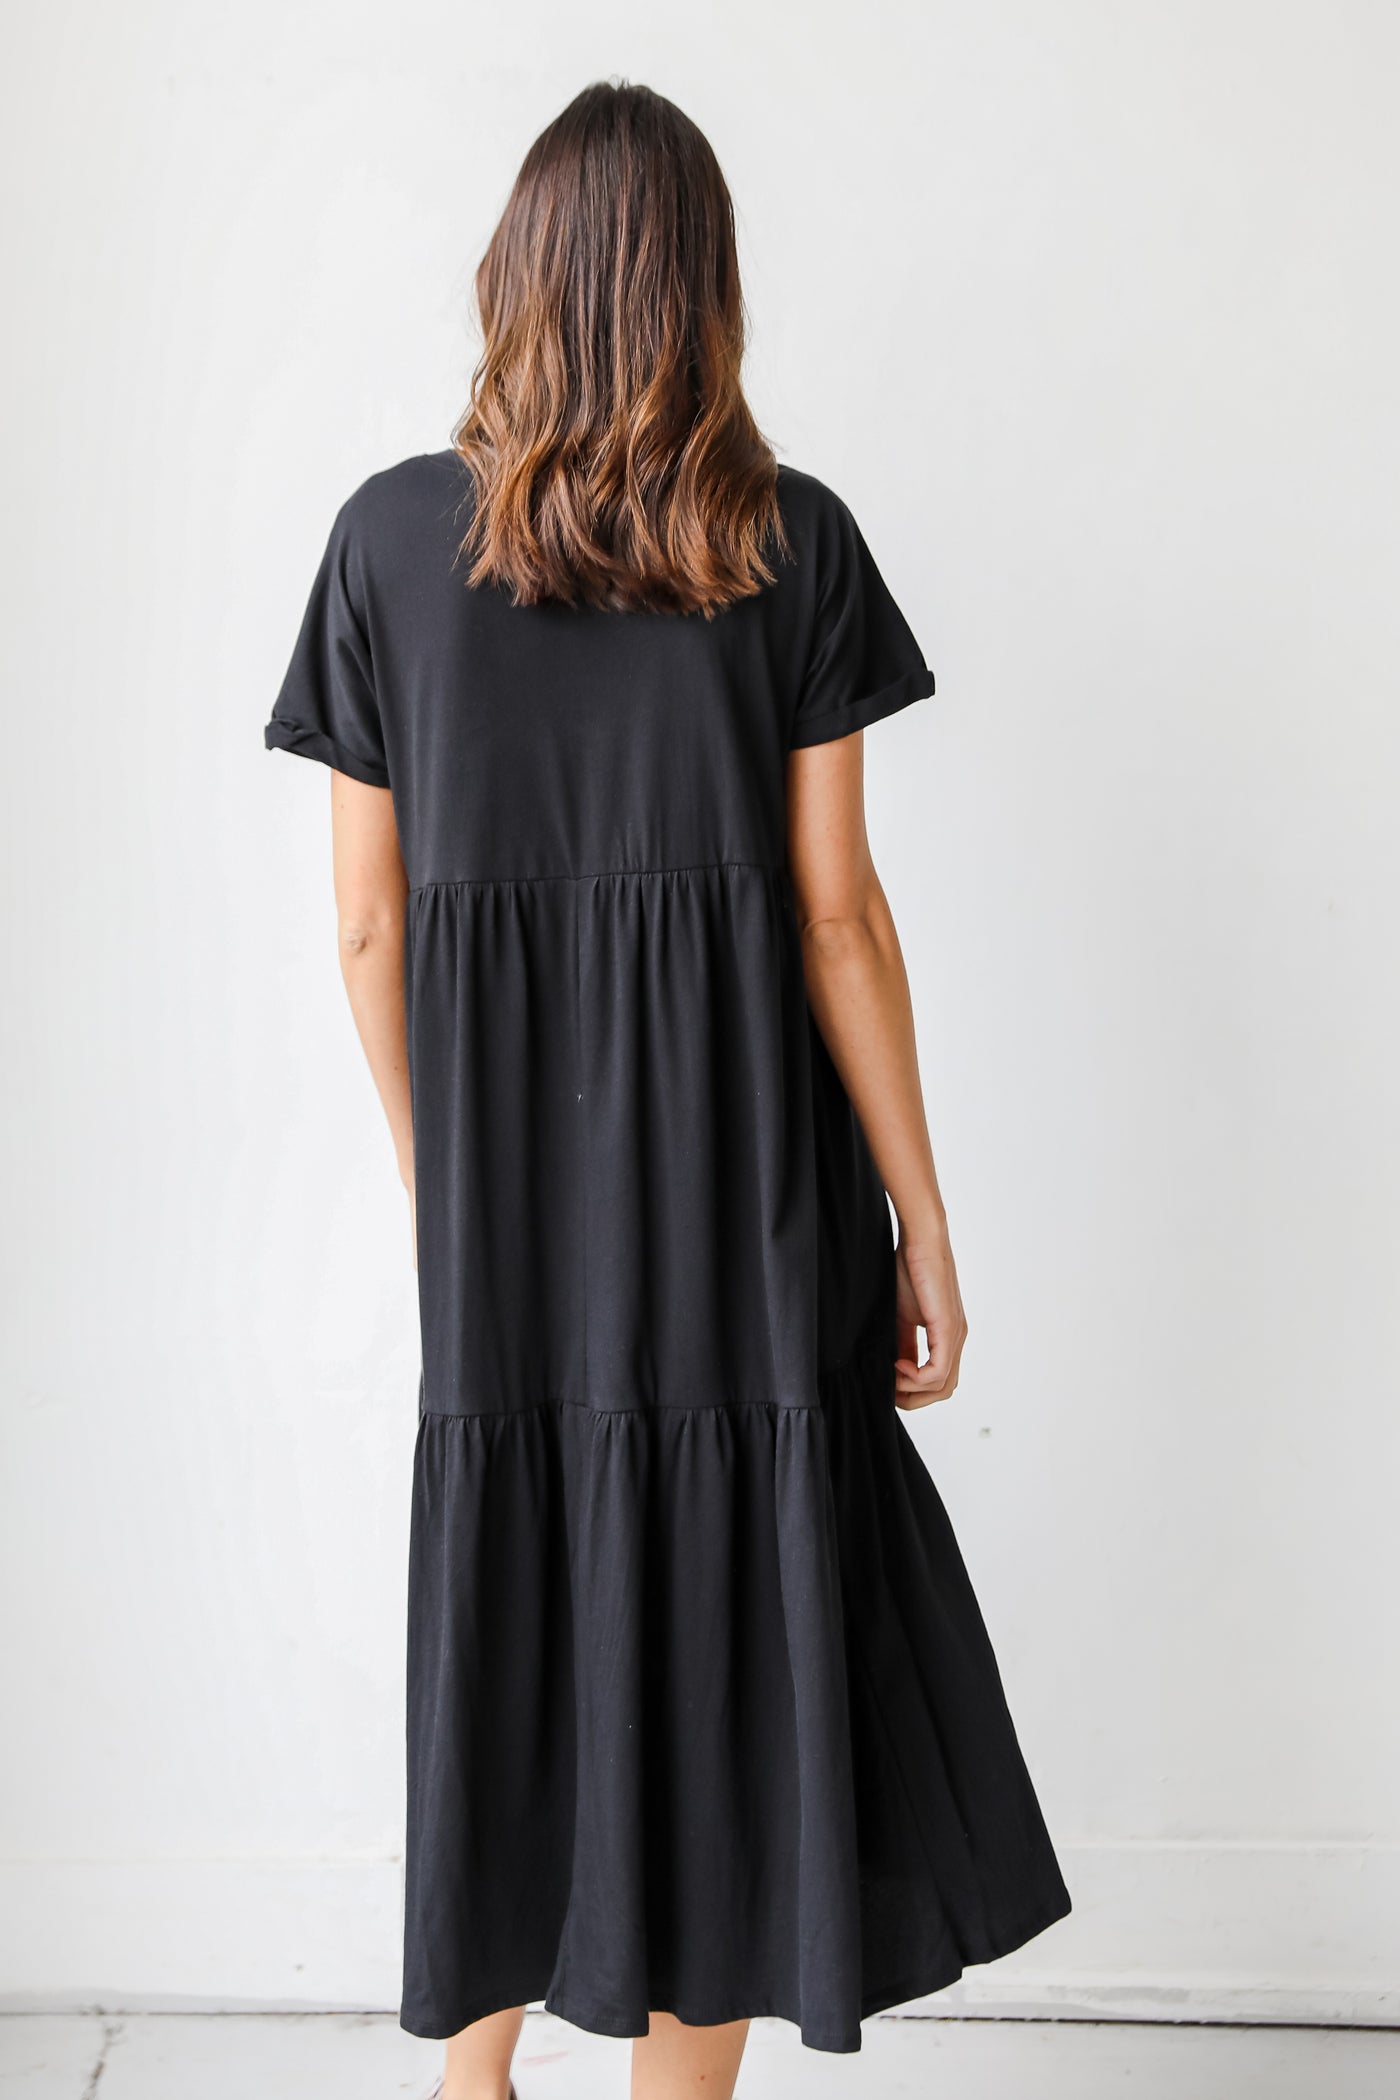 Tiered Midi Dress in black back view